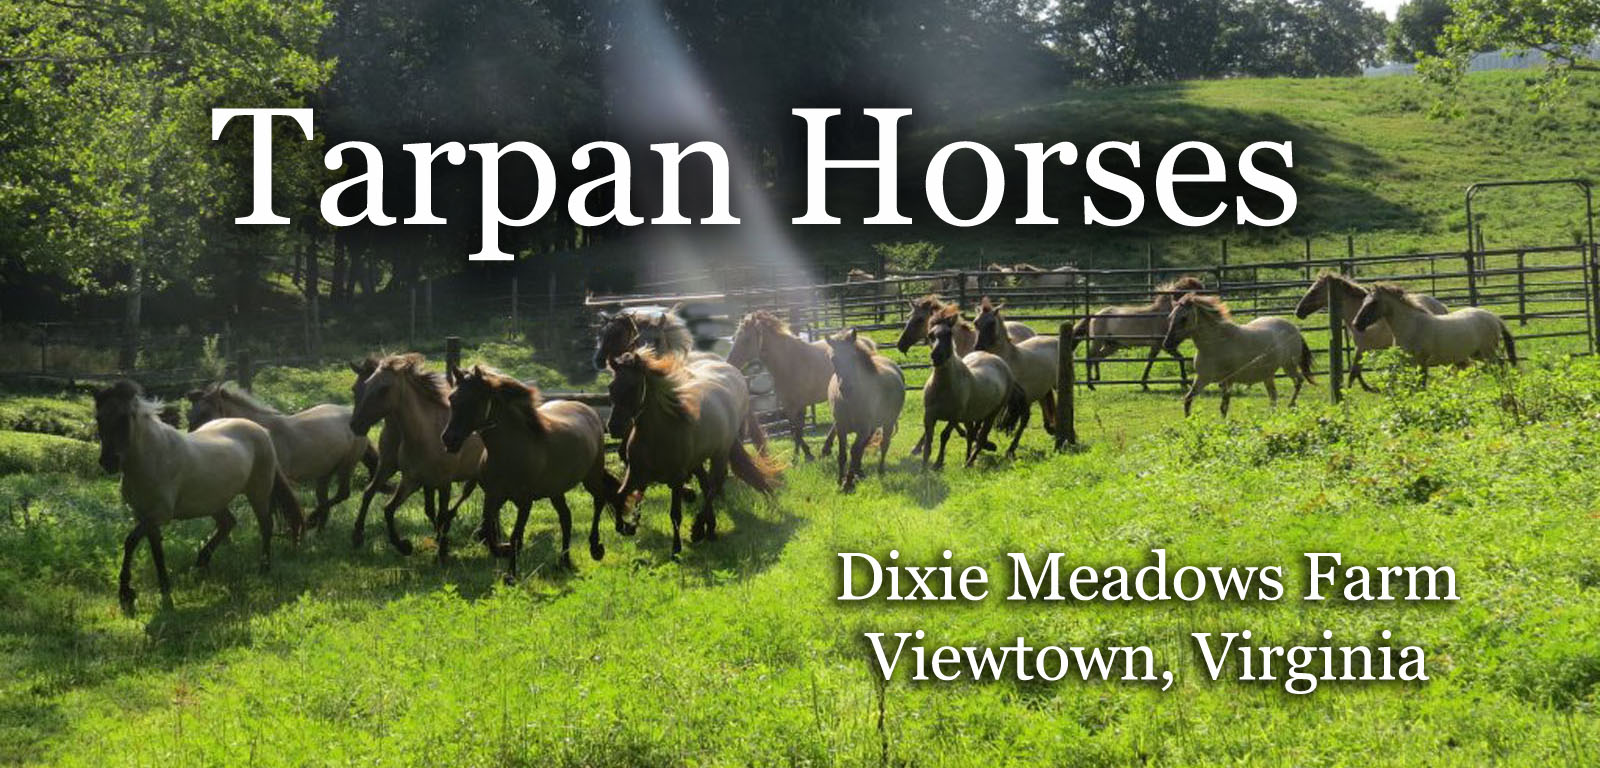  Dixie Meadows Farm Tarpan Horses